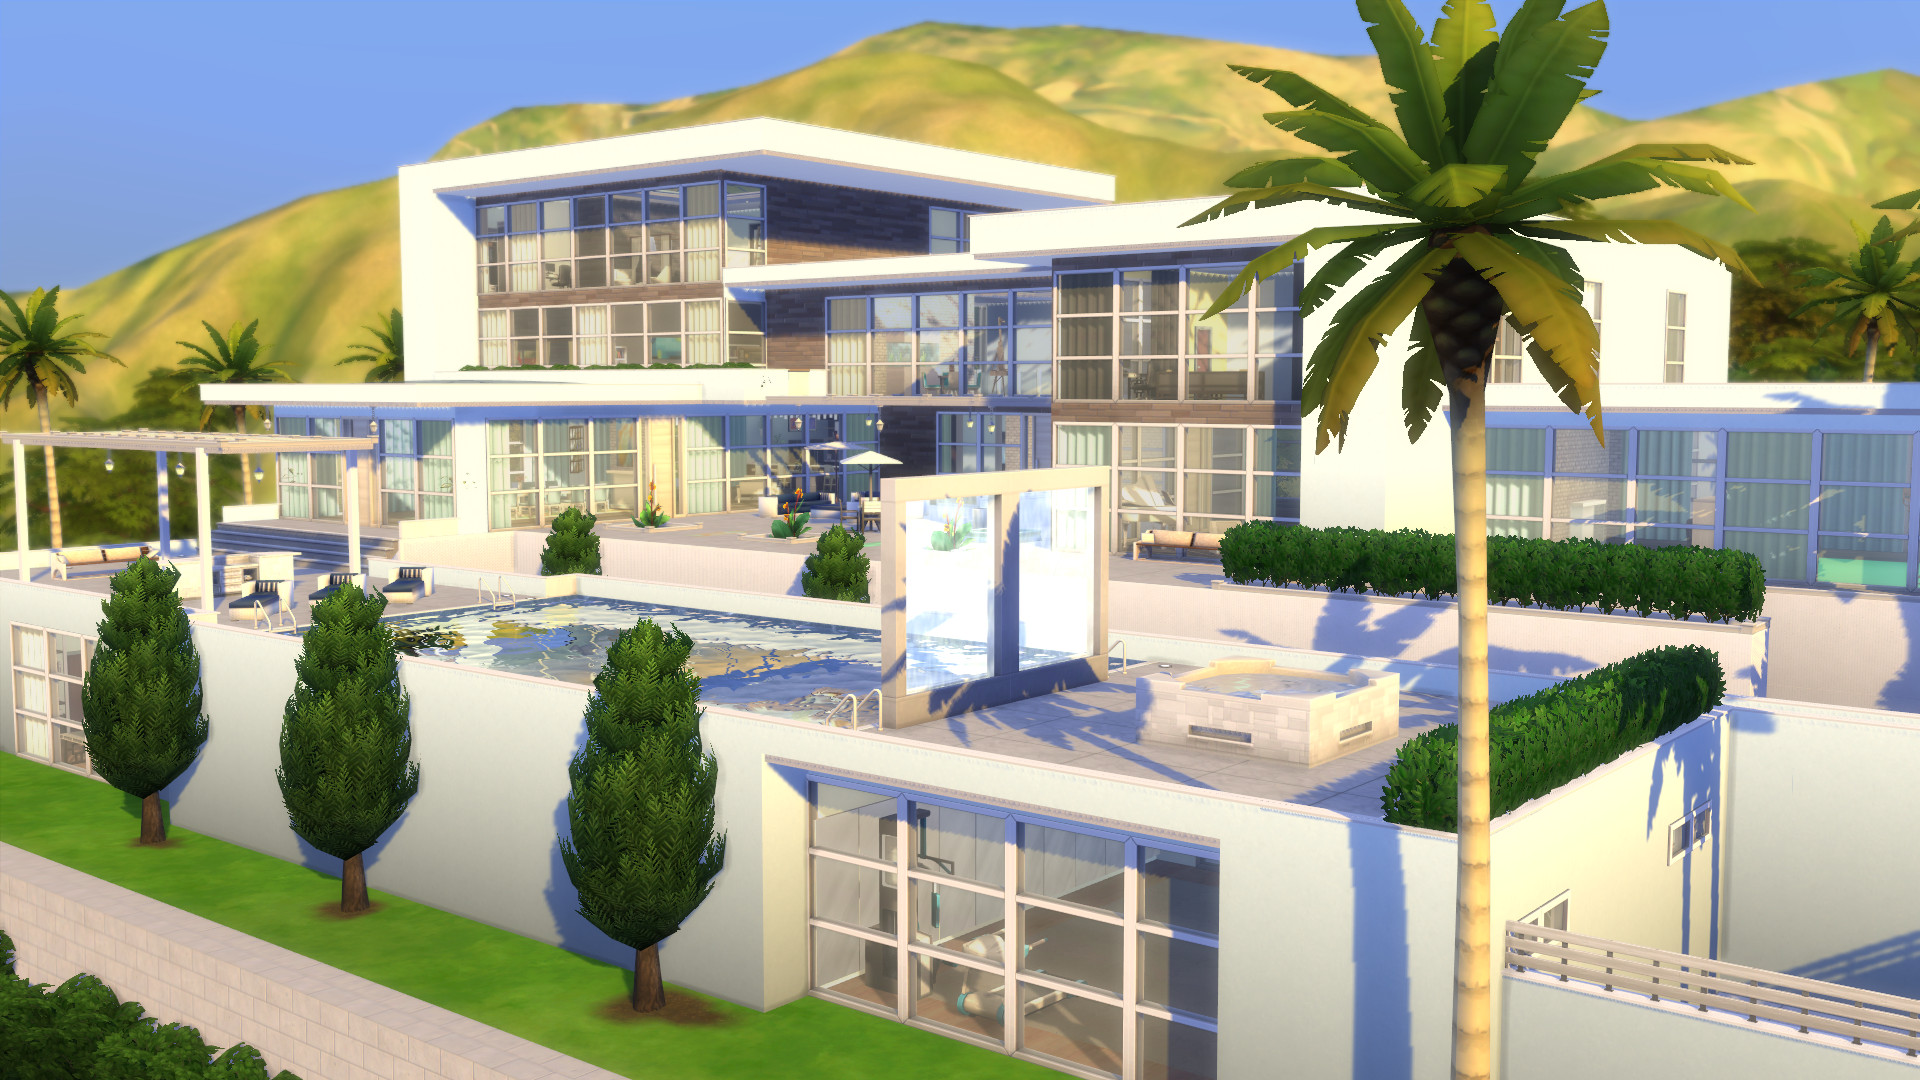 Mod The Sims Modern Celebrity Mansion 6br 8ba